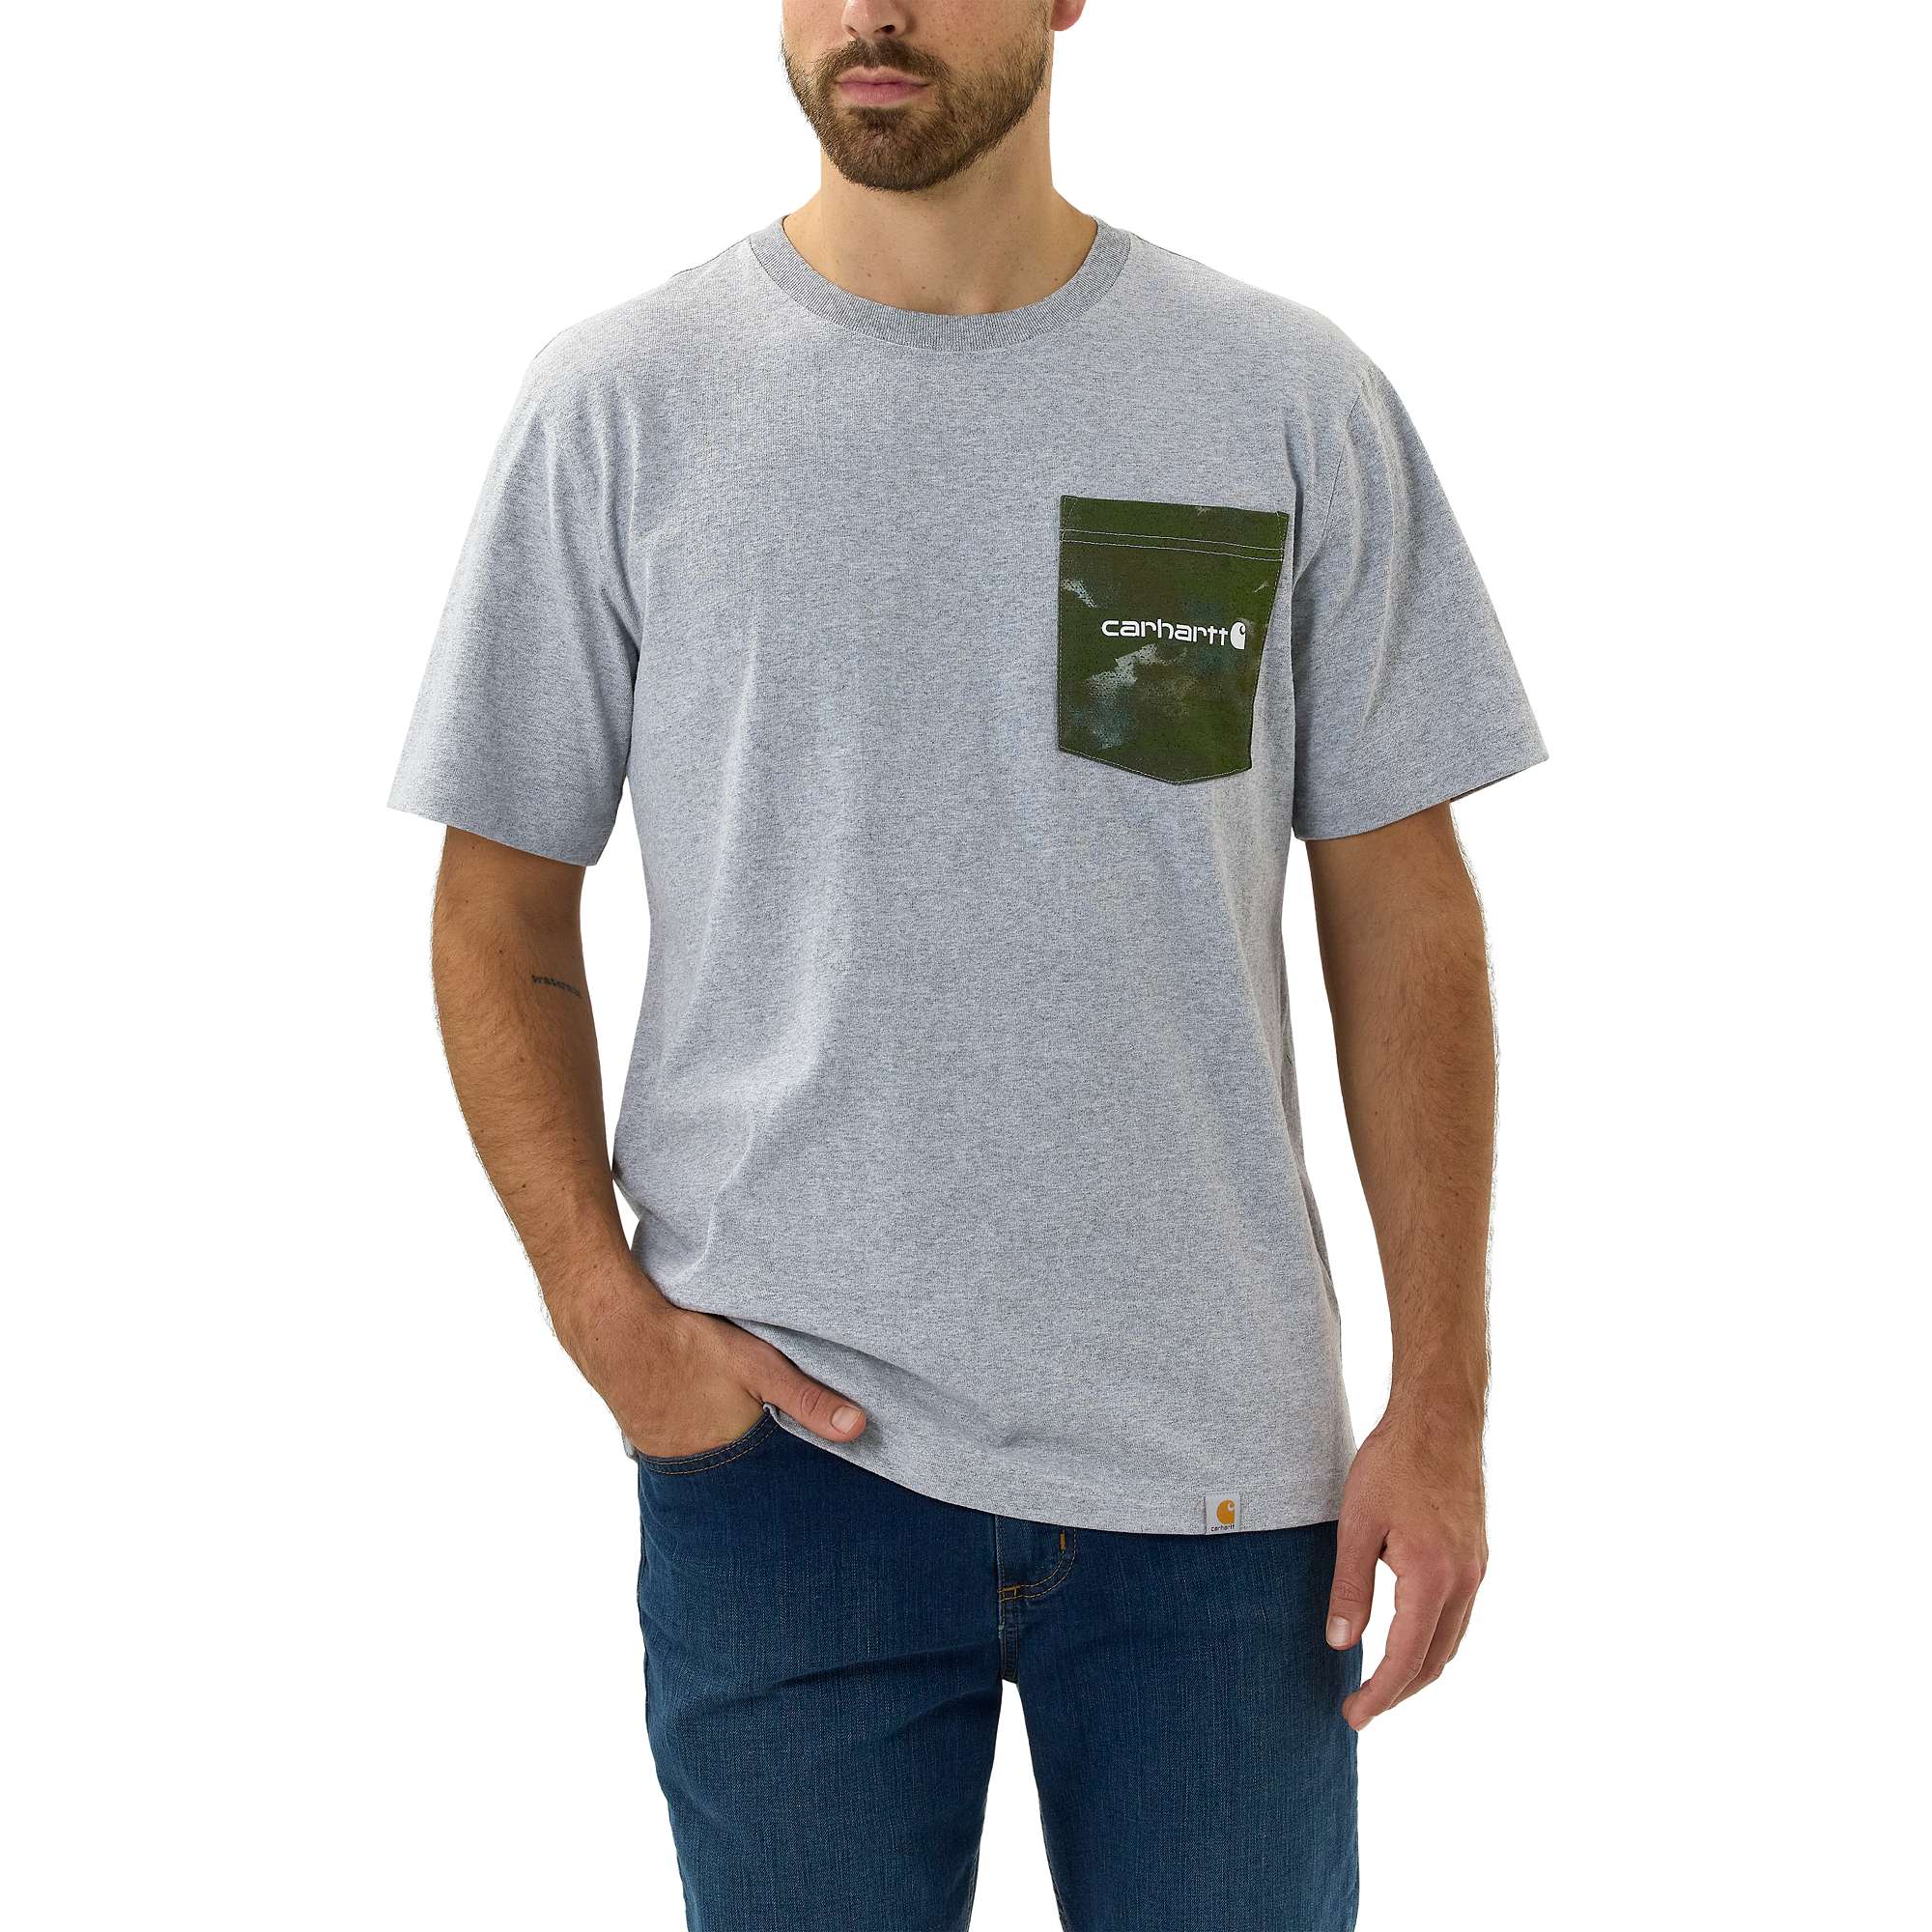 Carhartt Herren T-Shirt mit Brusttasche in Camo Grafik